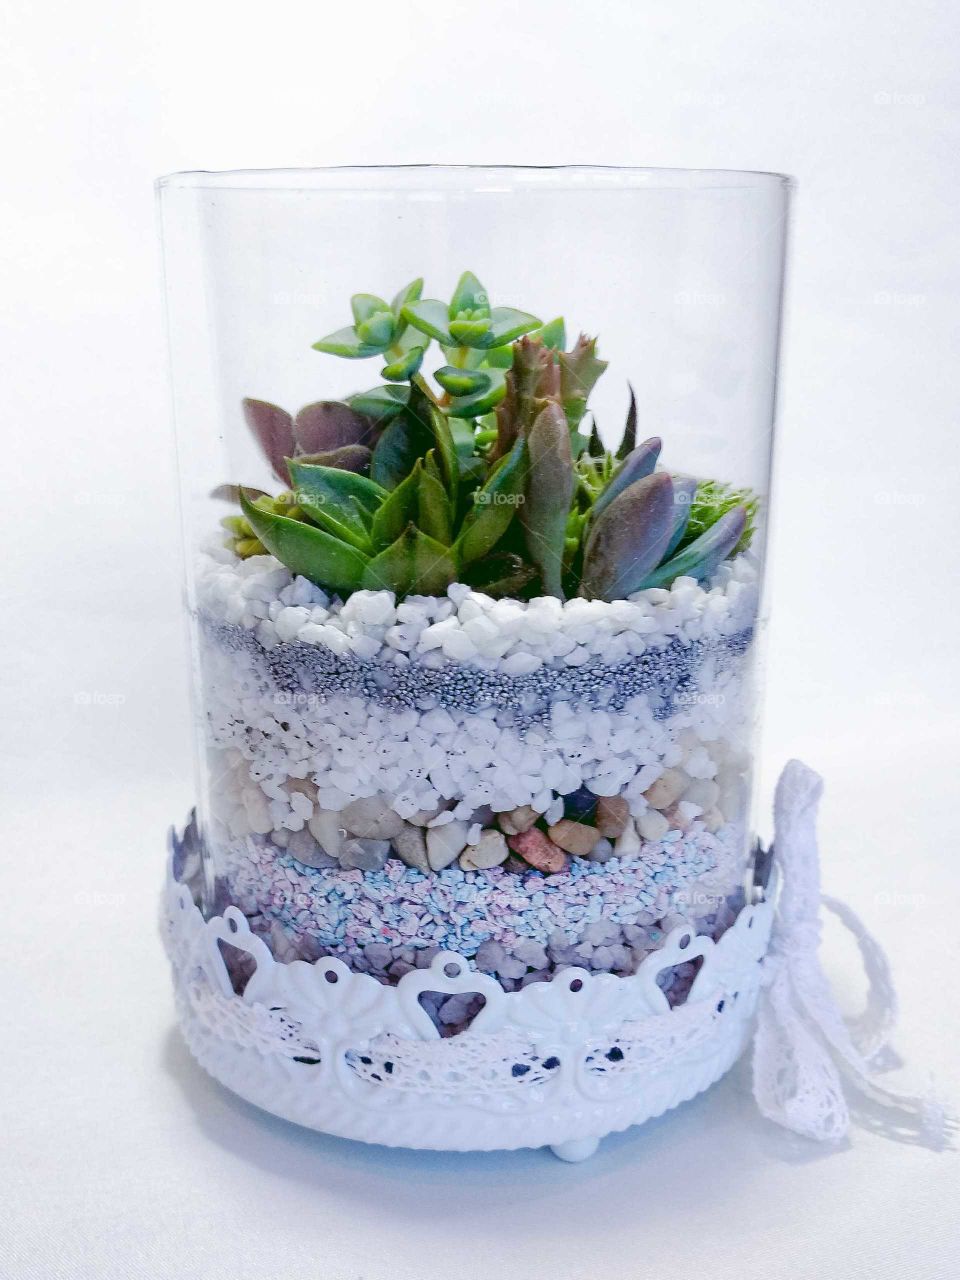 The succulents terrarium in a glass vase